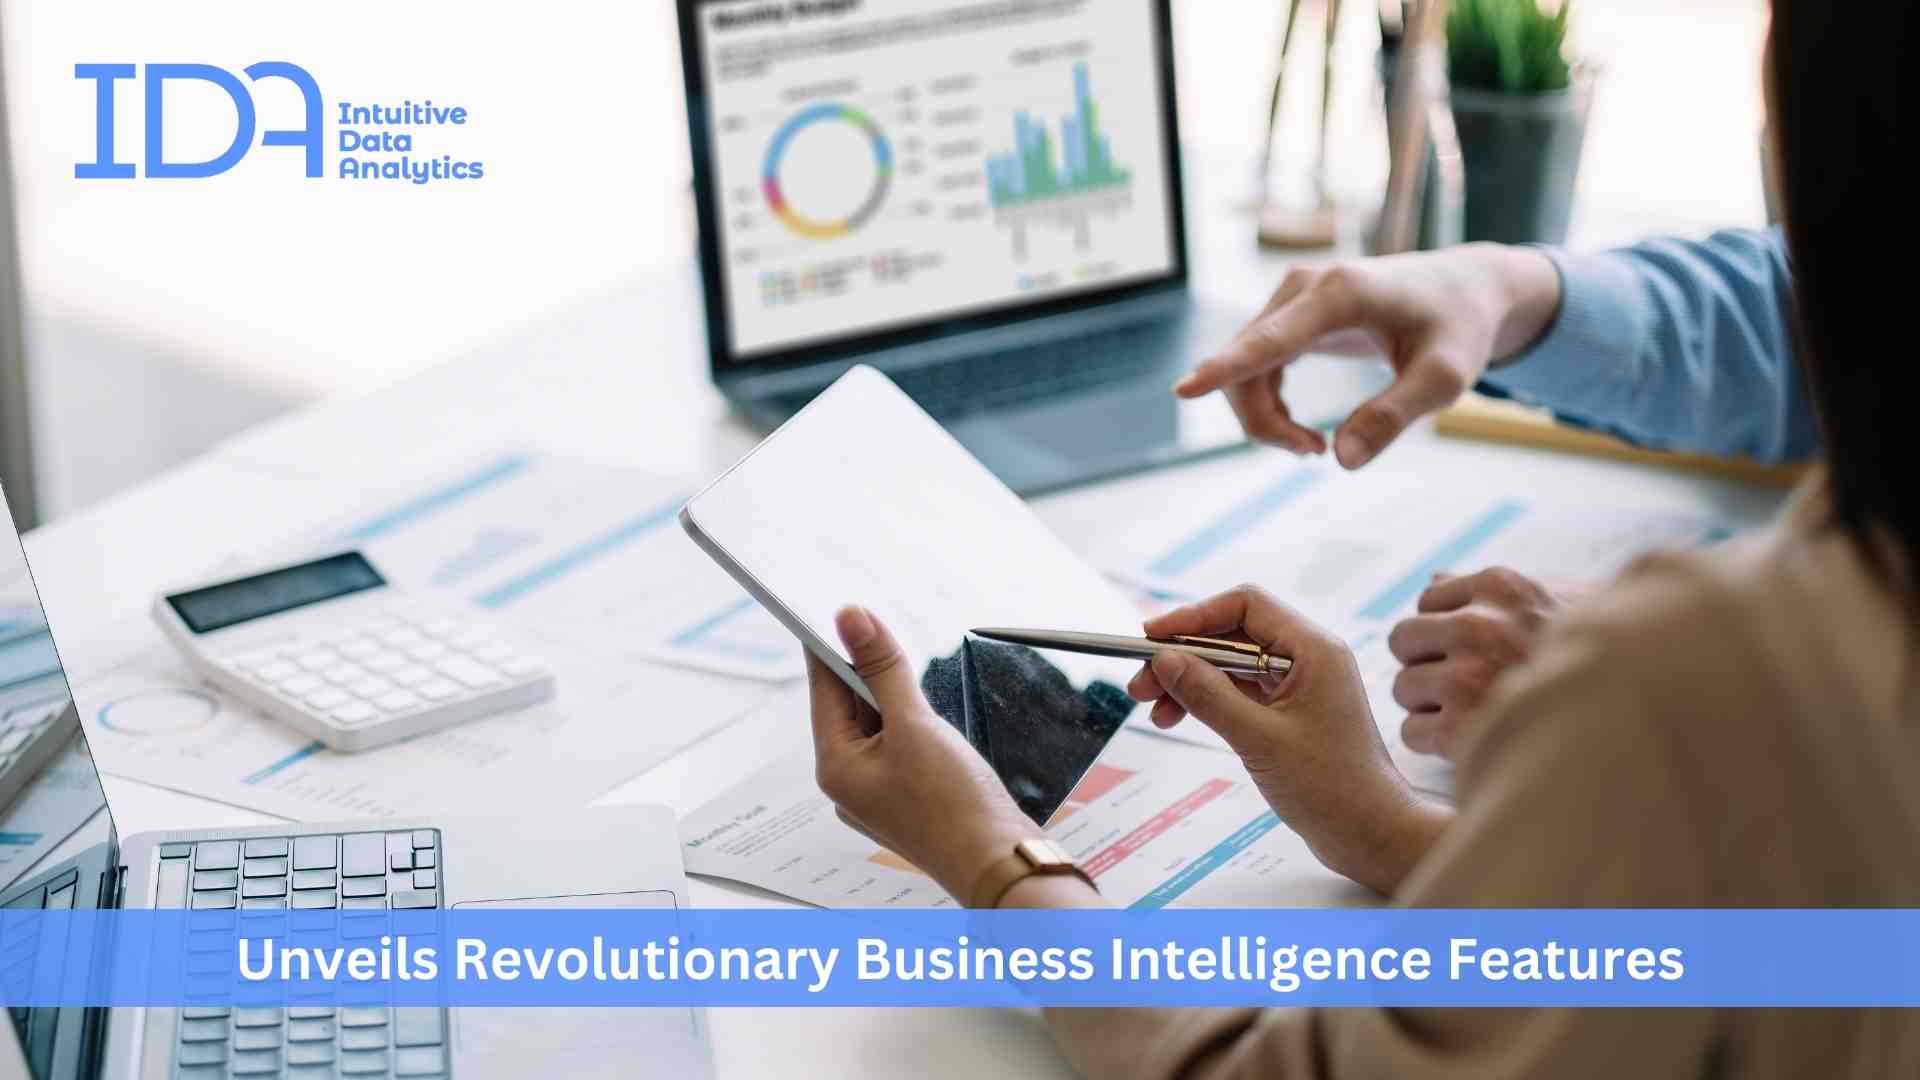 Intuitive Data Analytics Unveils Revolutionary Business Intelligence Features to Its No-Code BI Platform